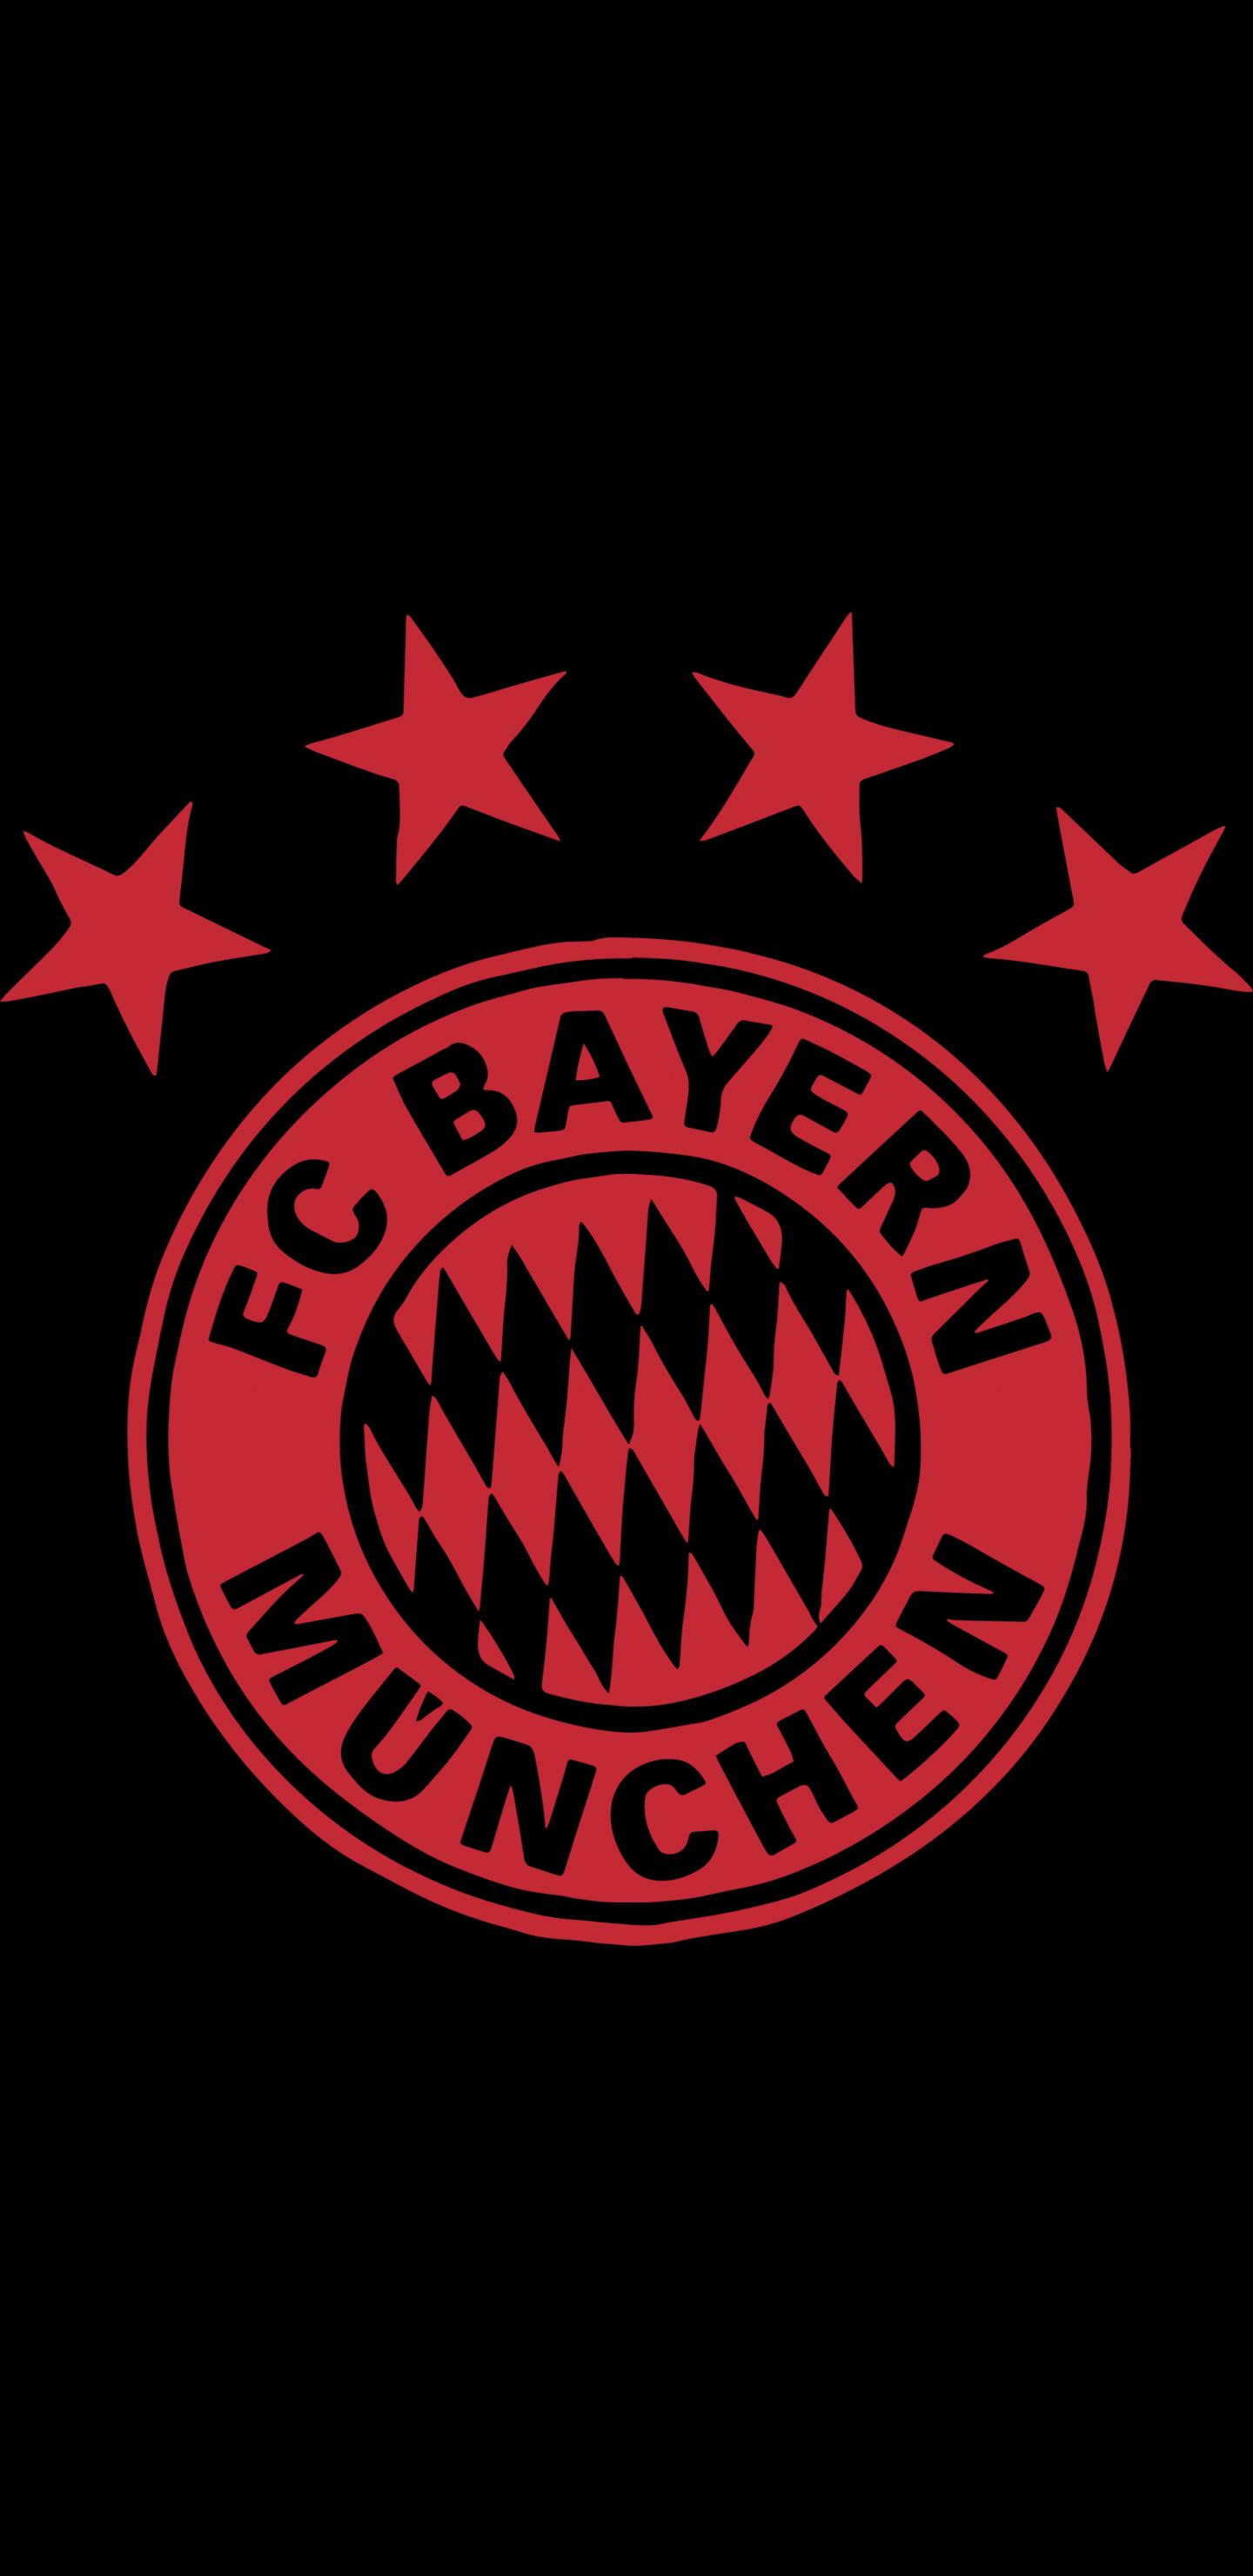 Bayern München Wallpaper iPhone